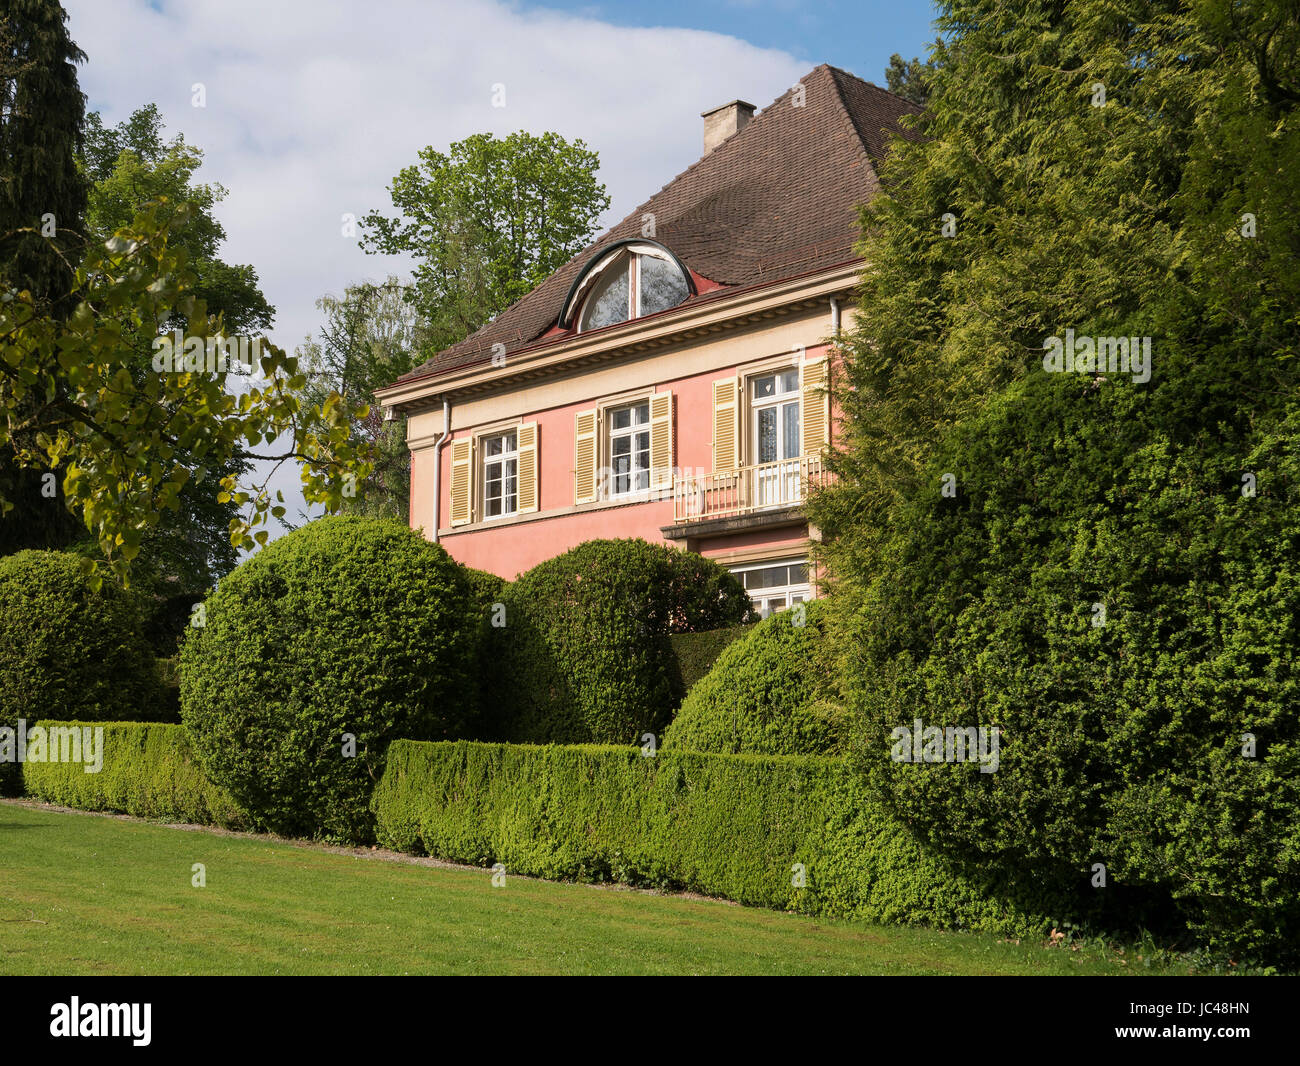 mansion built by Alber Speer senior, Stiegeler Park gardens, Constance, Baden-Württemberg, Germany, Europe Stock Photo